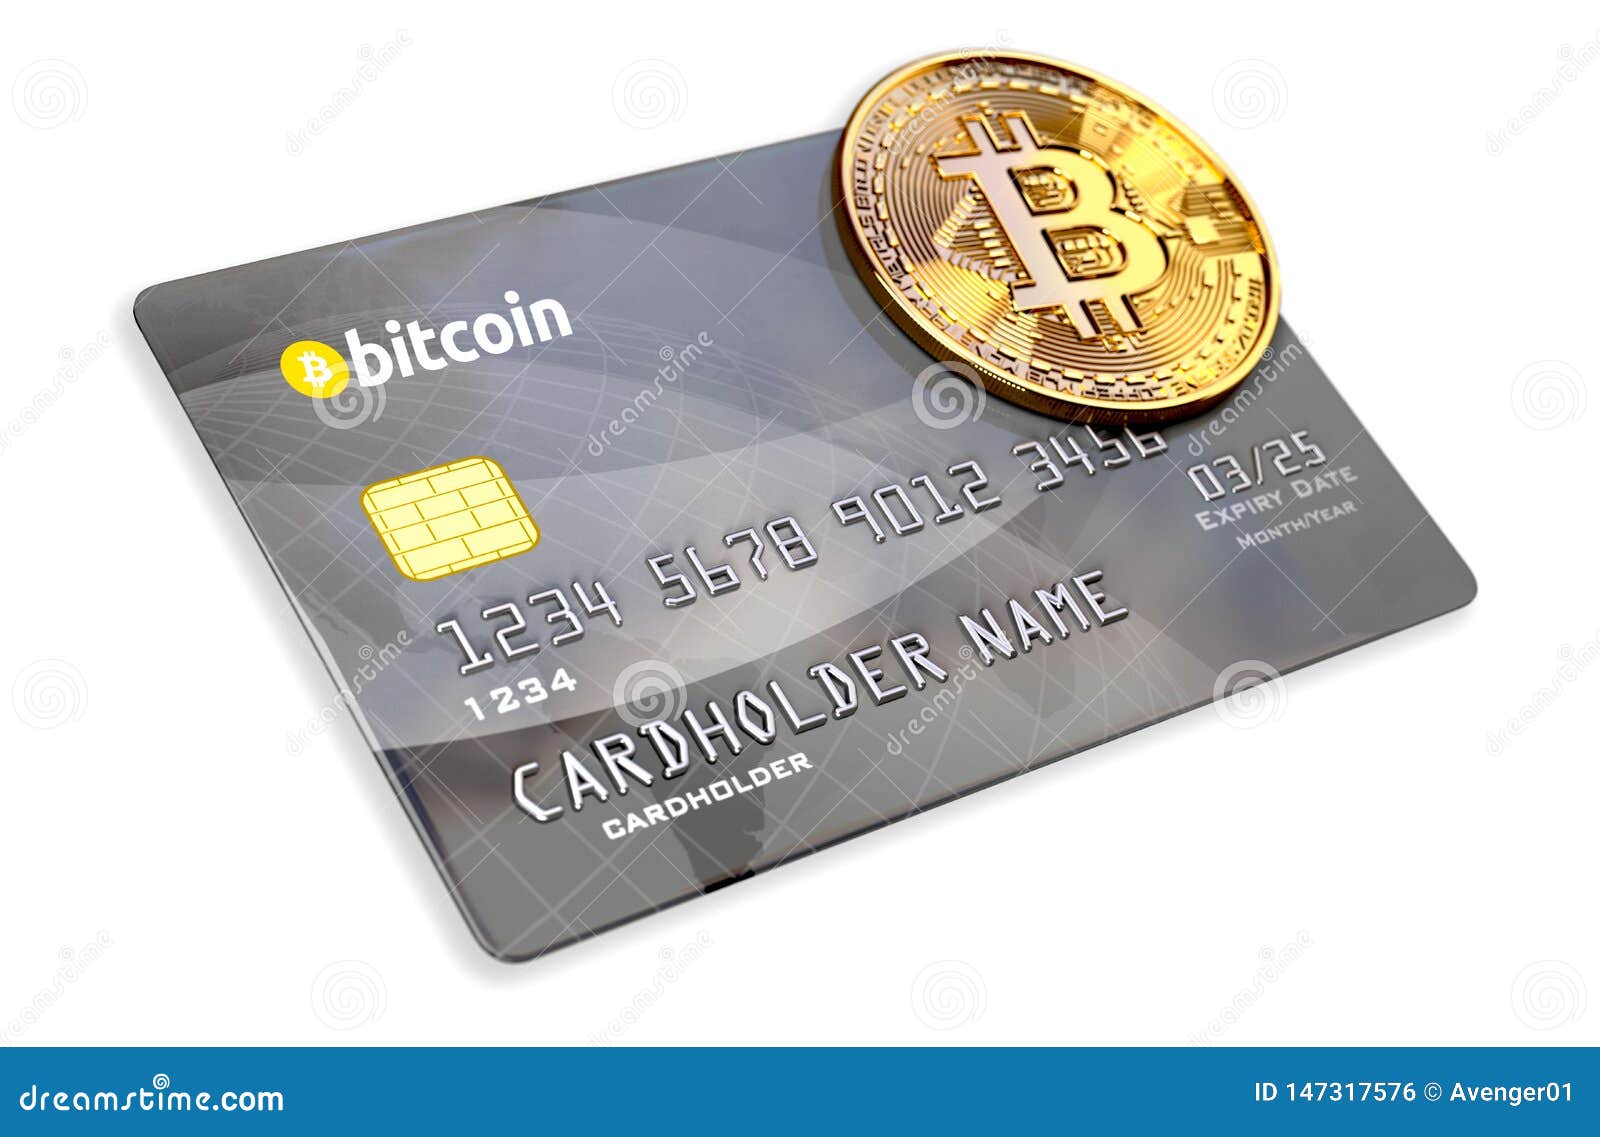 Free Bitcoin CryptoVoucher $50 - Rewards Store | Swagbucks